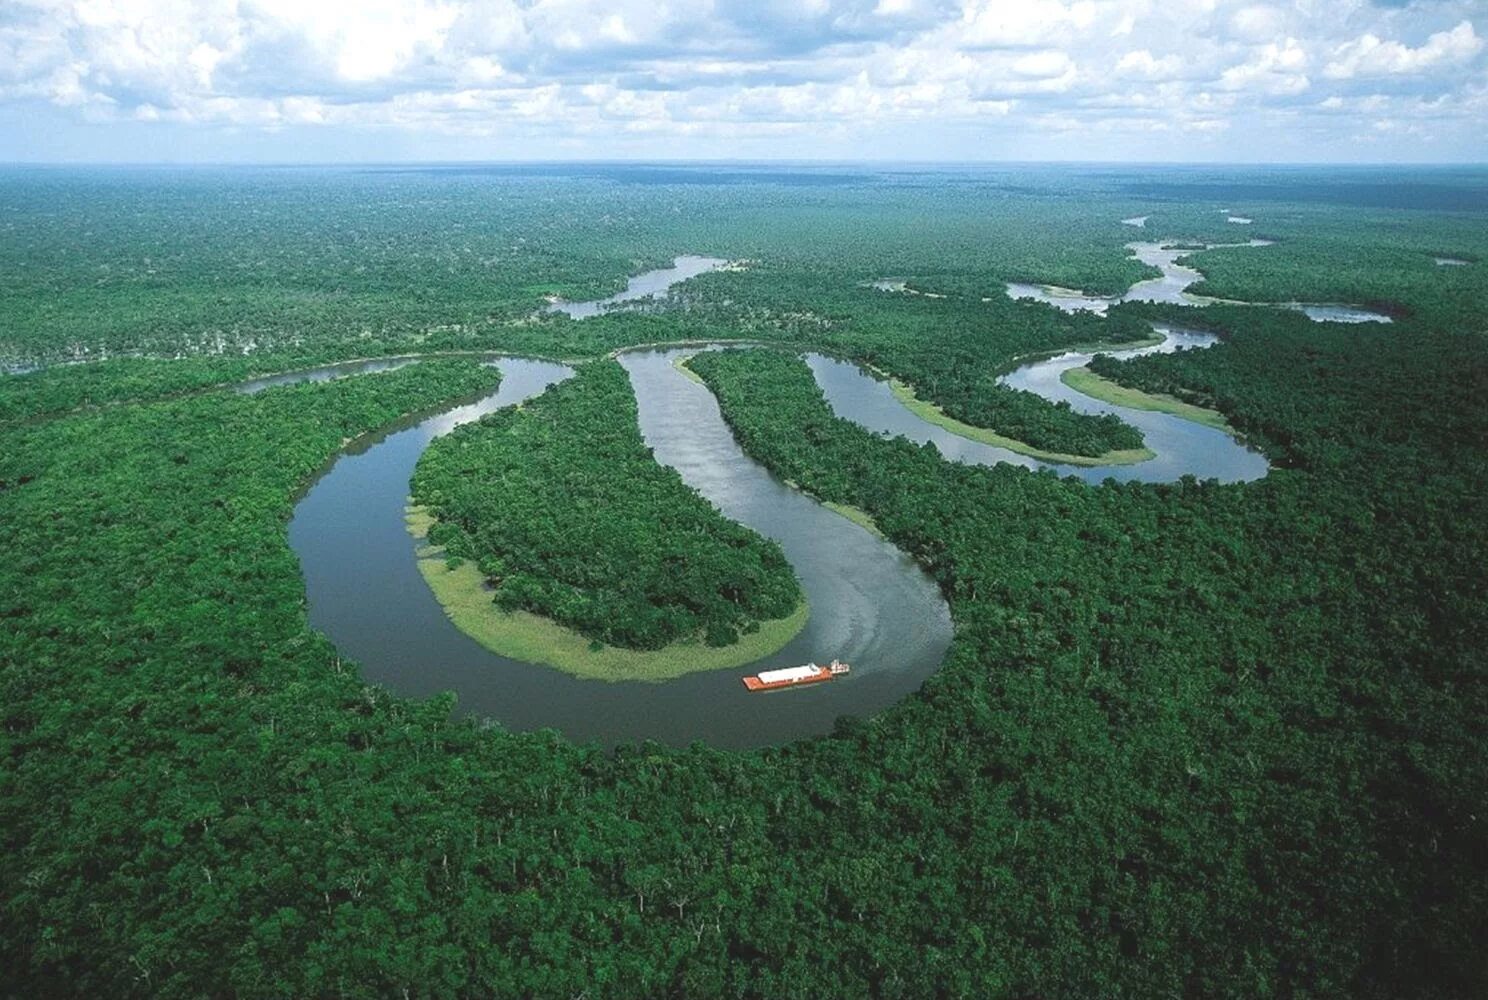 Amazon borneo congo. Река Амазонка в Бразилии. Южная Америка река Амазонка. Амазонская низменность. Бразилия Амазонская низменность.